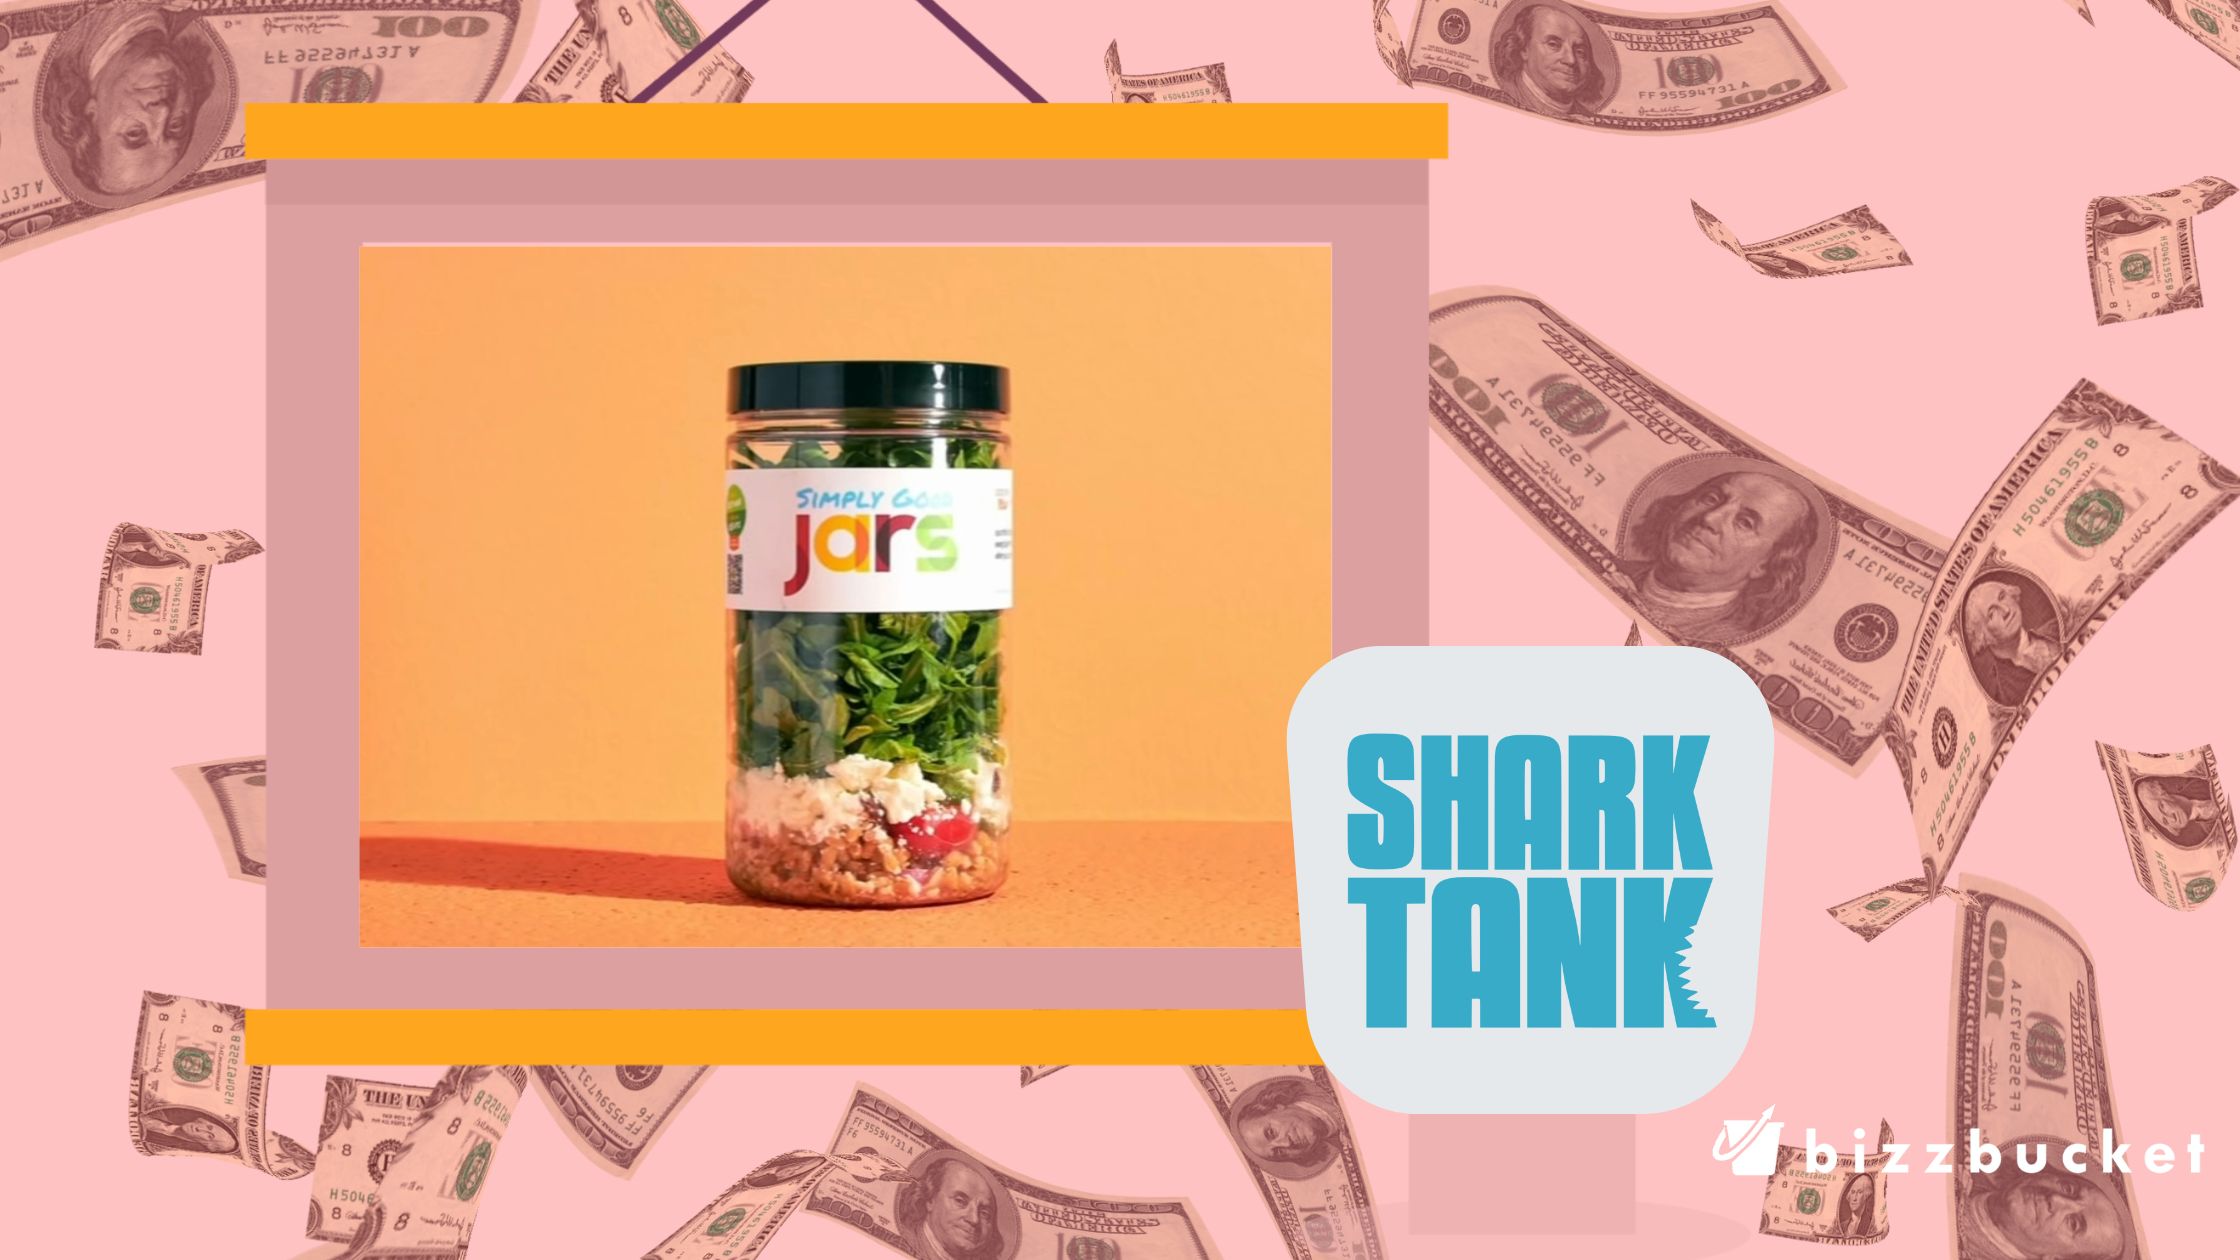 Simply Good Jars shark tank update